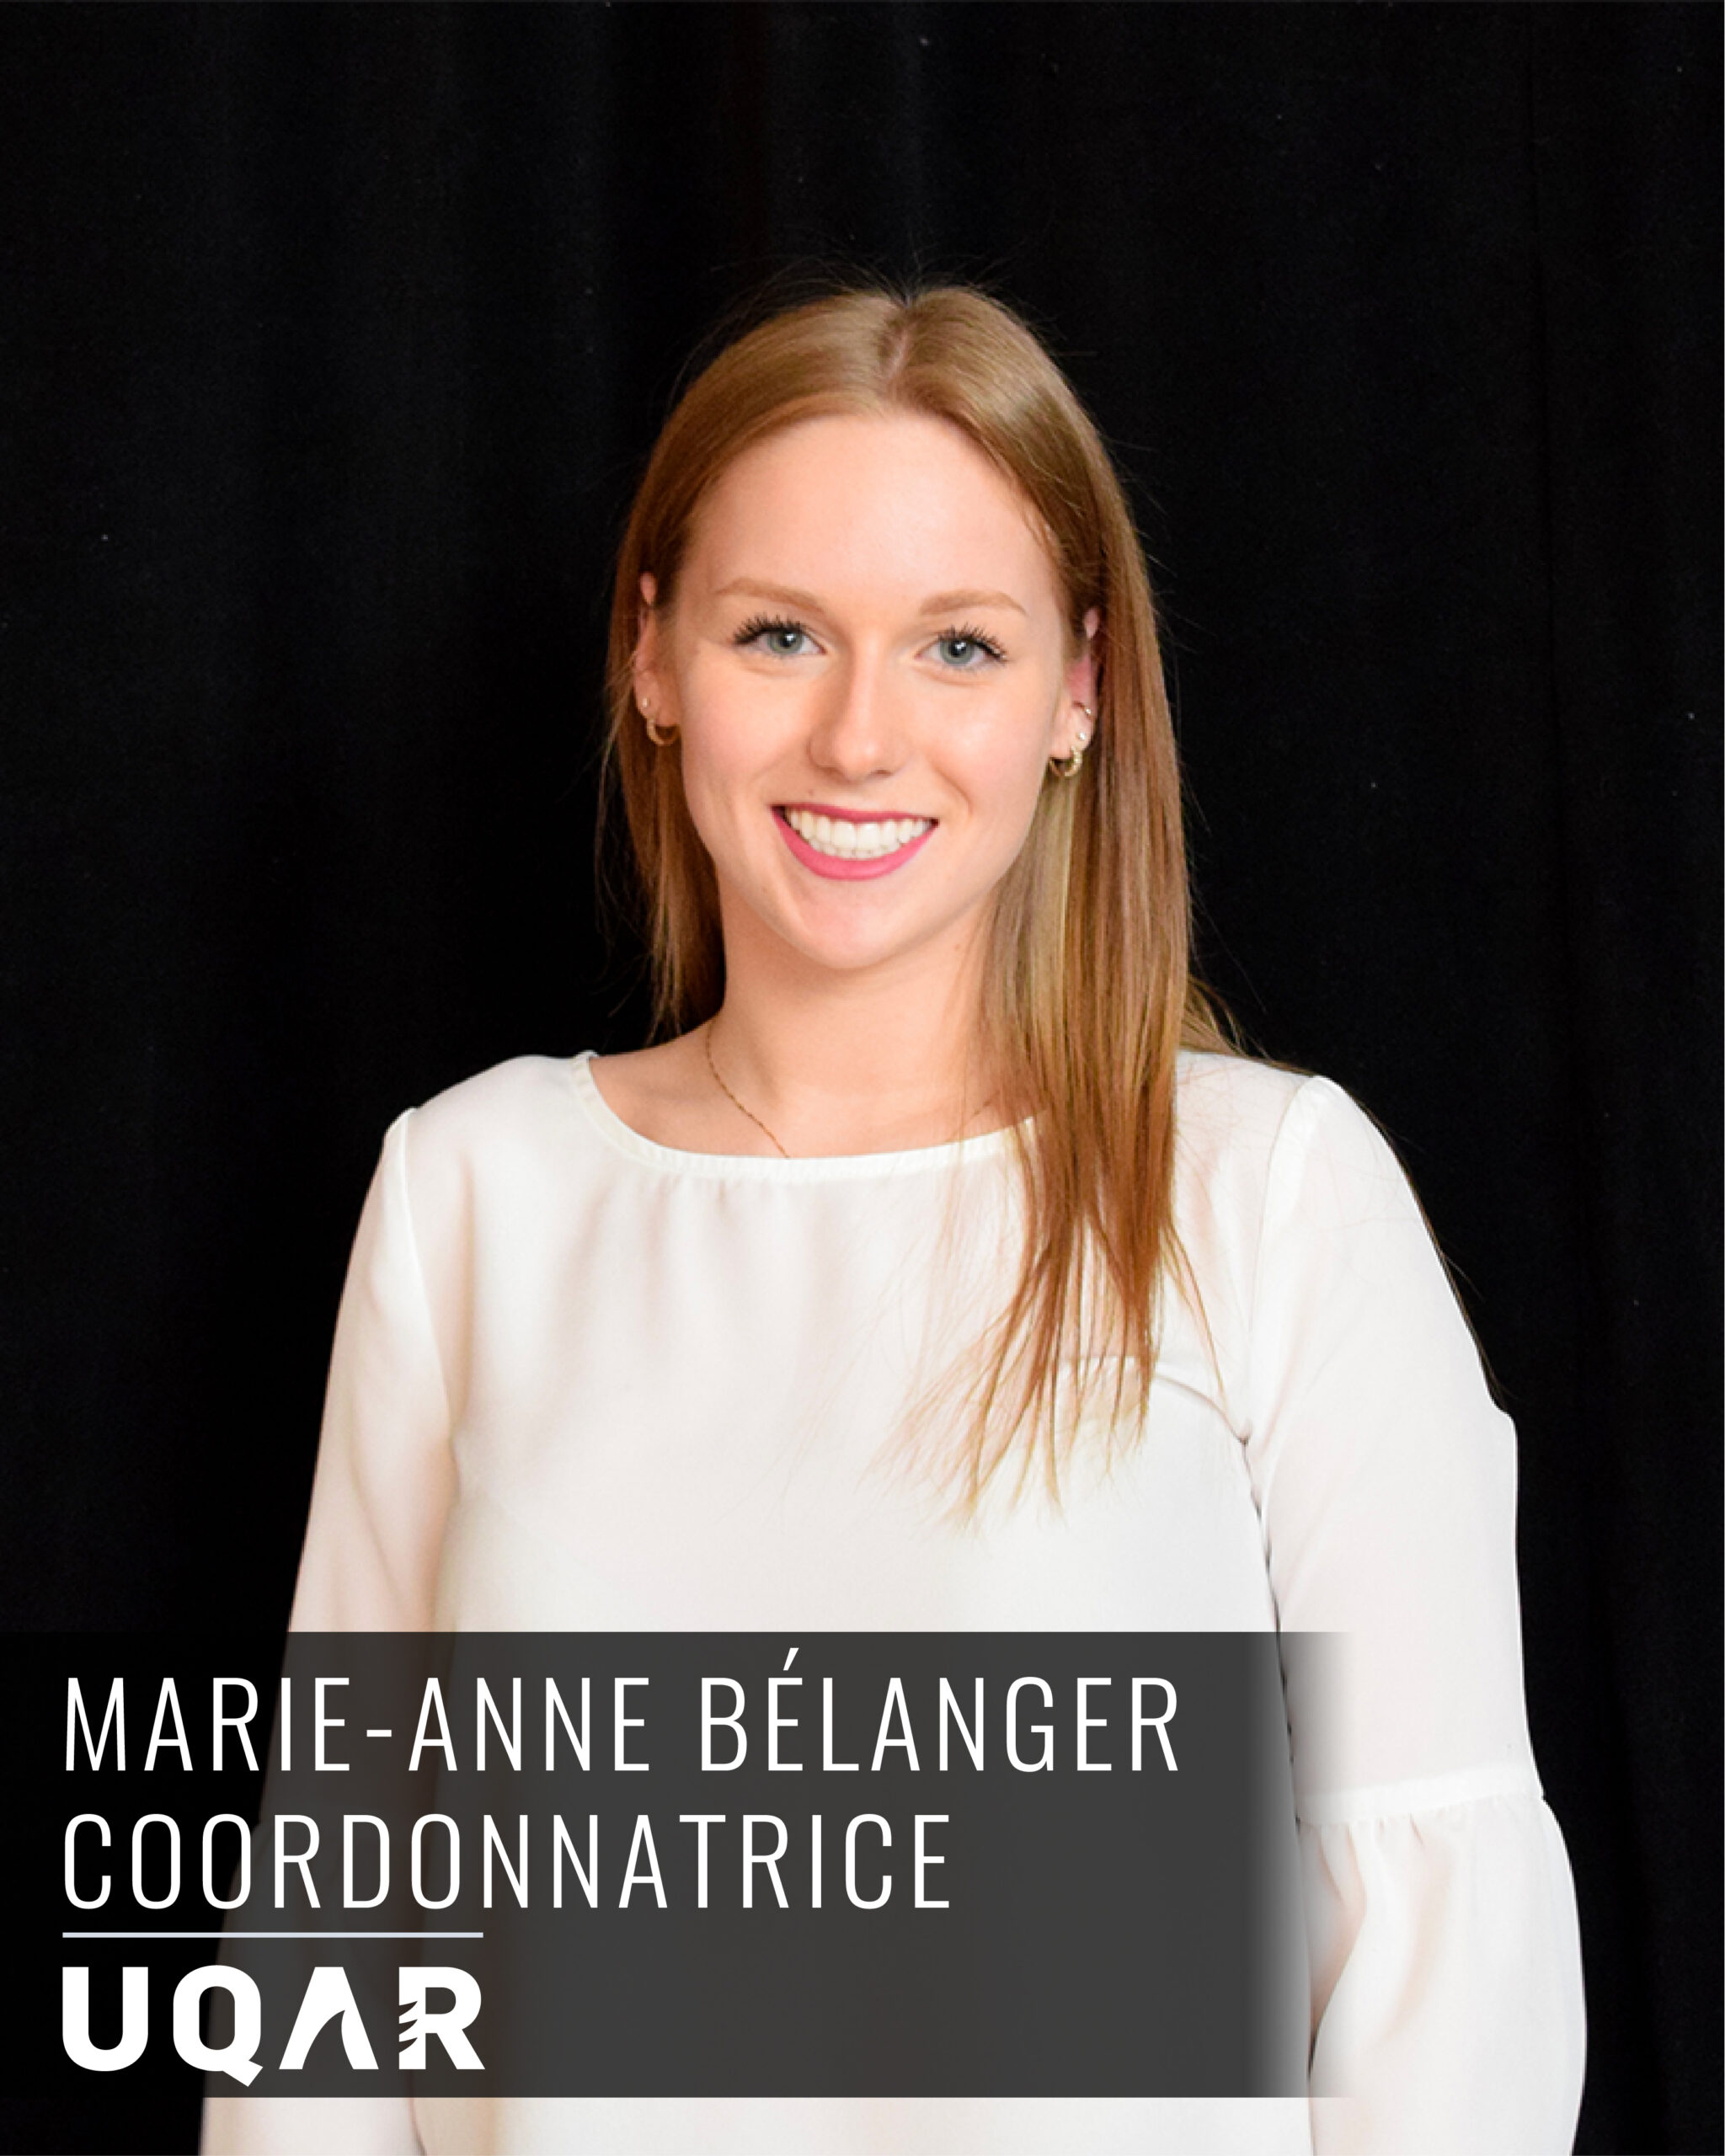 Marie-Anne Bélanger